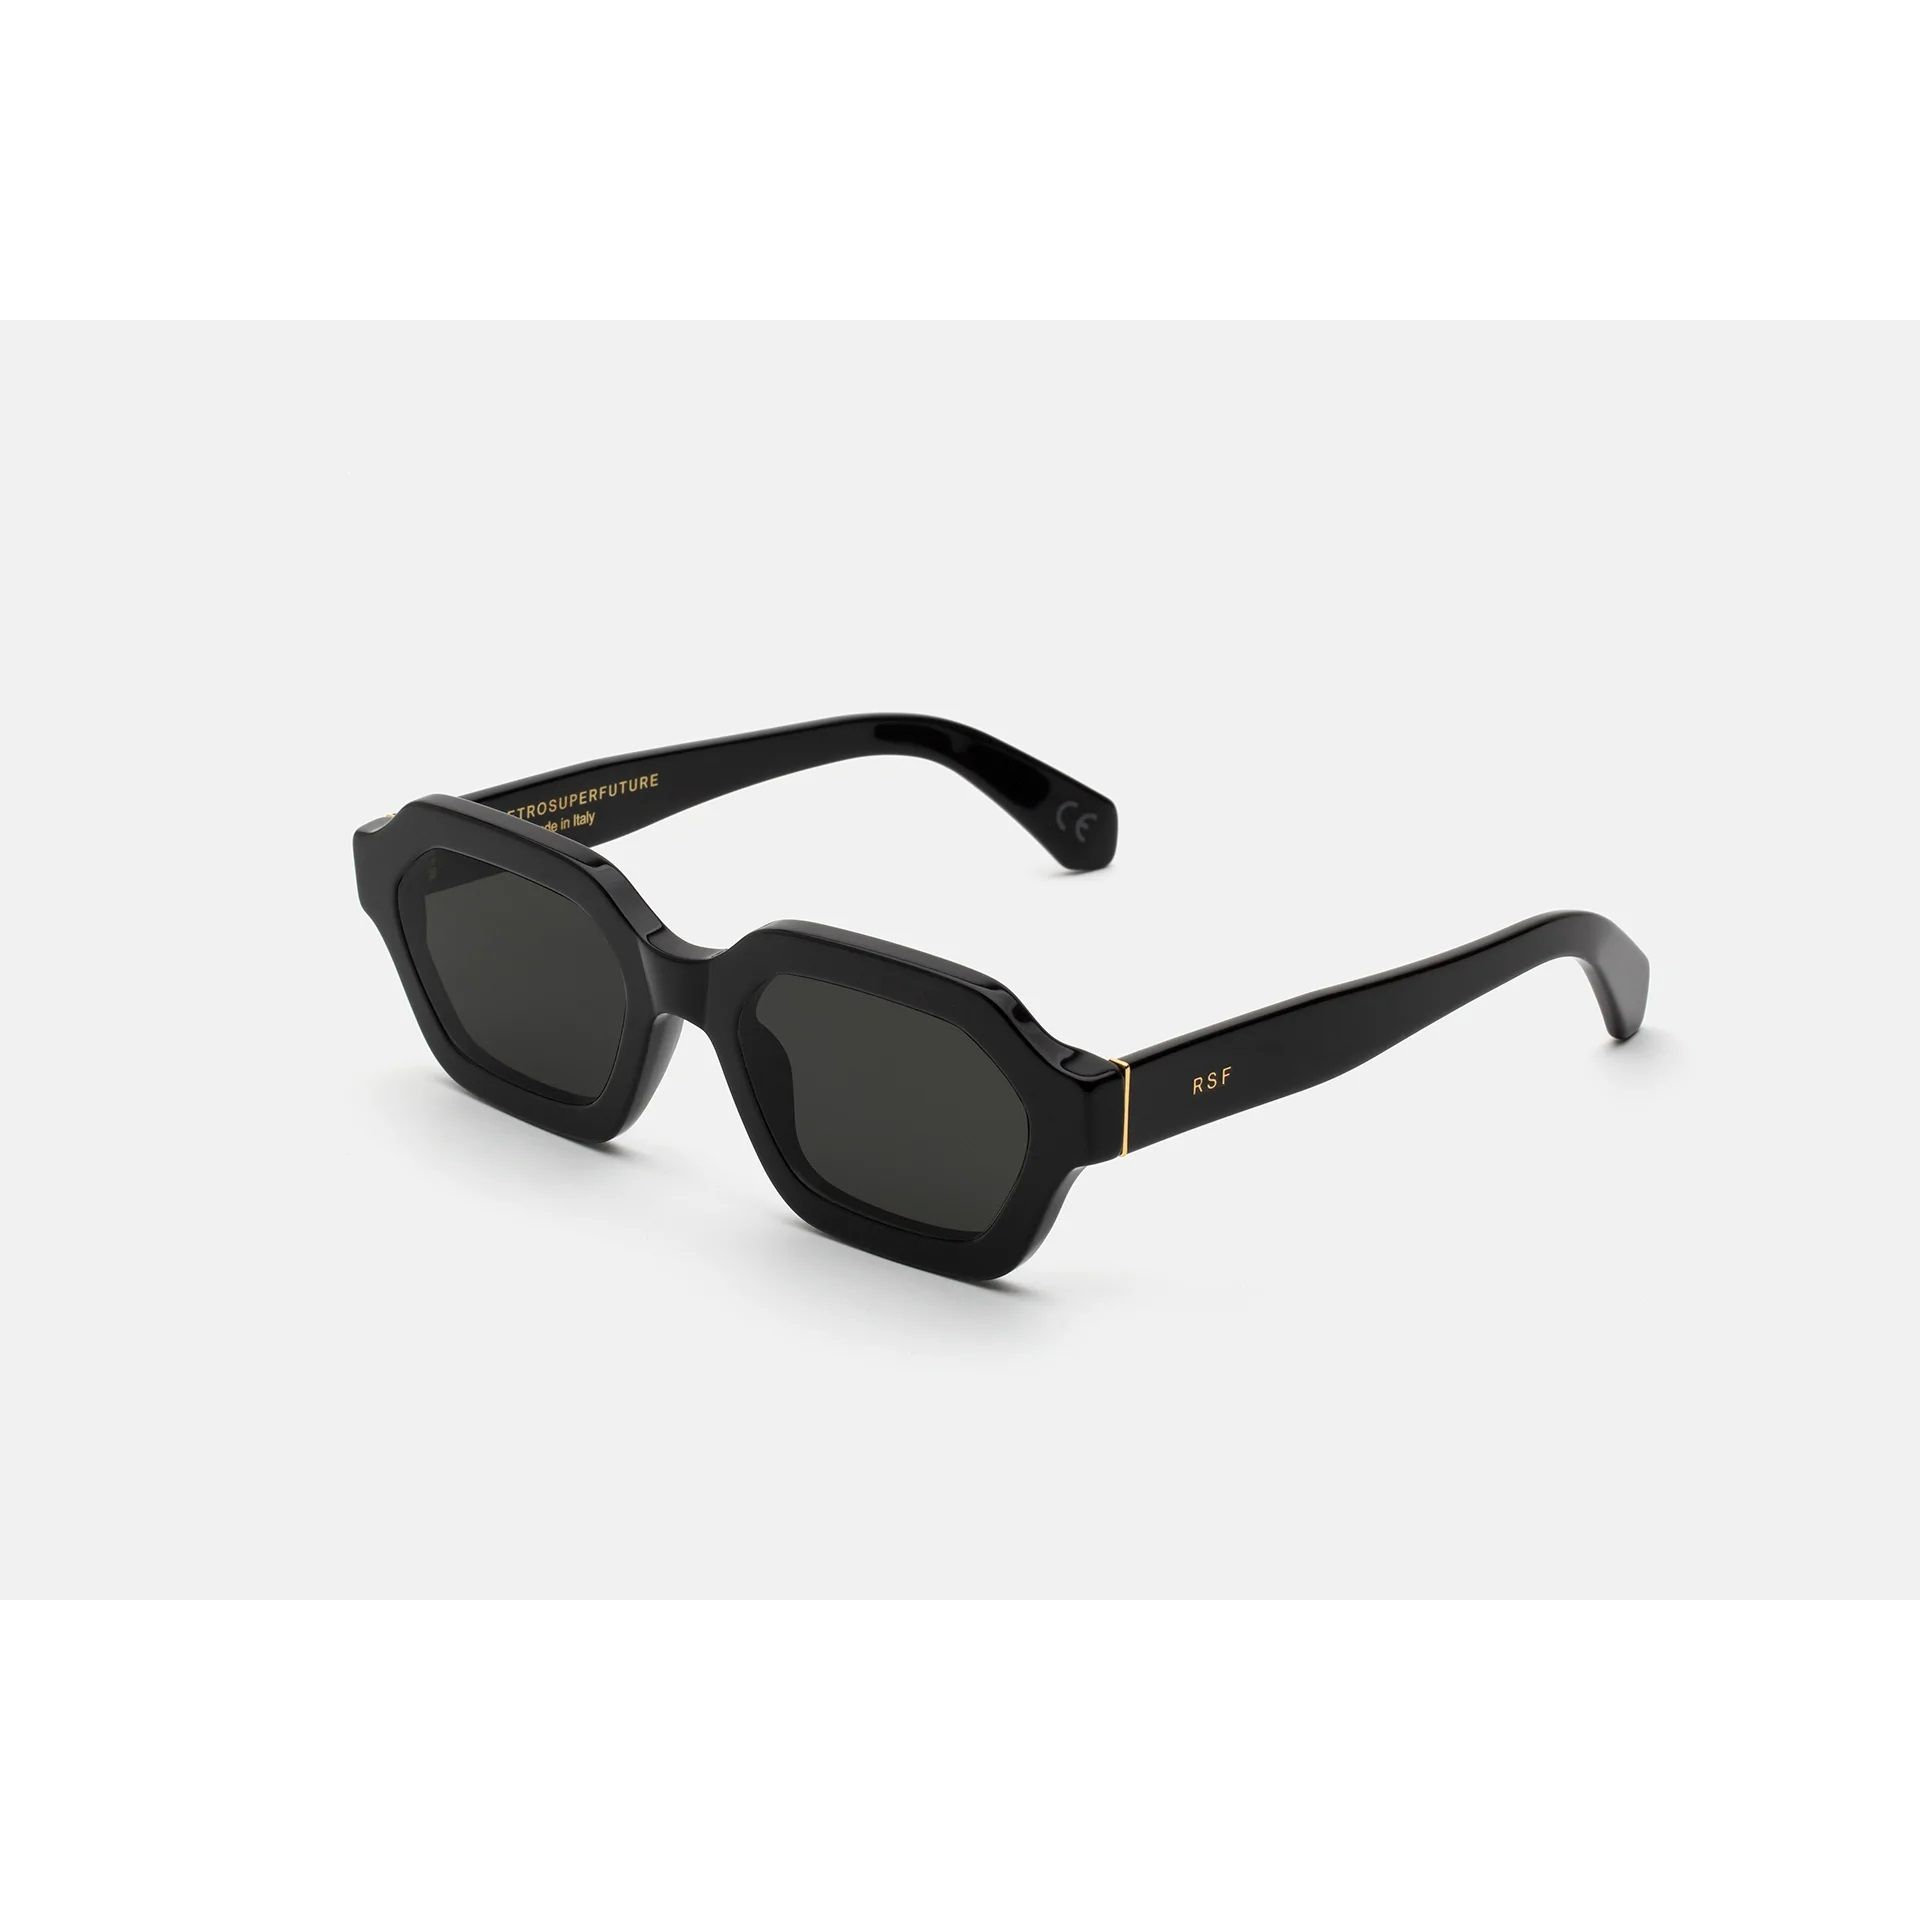 POOCH BLACK Irregular Sunglasses F52 - size 54